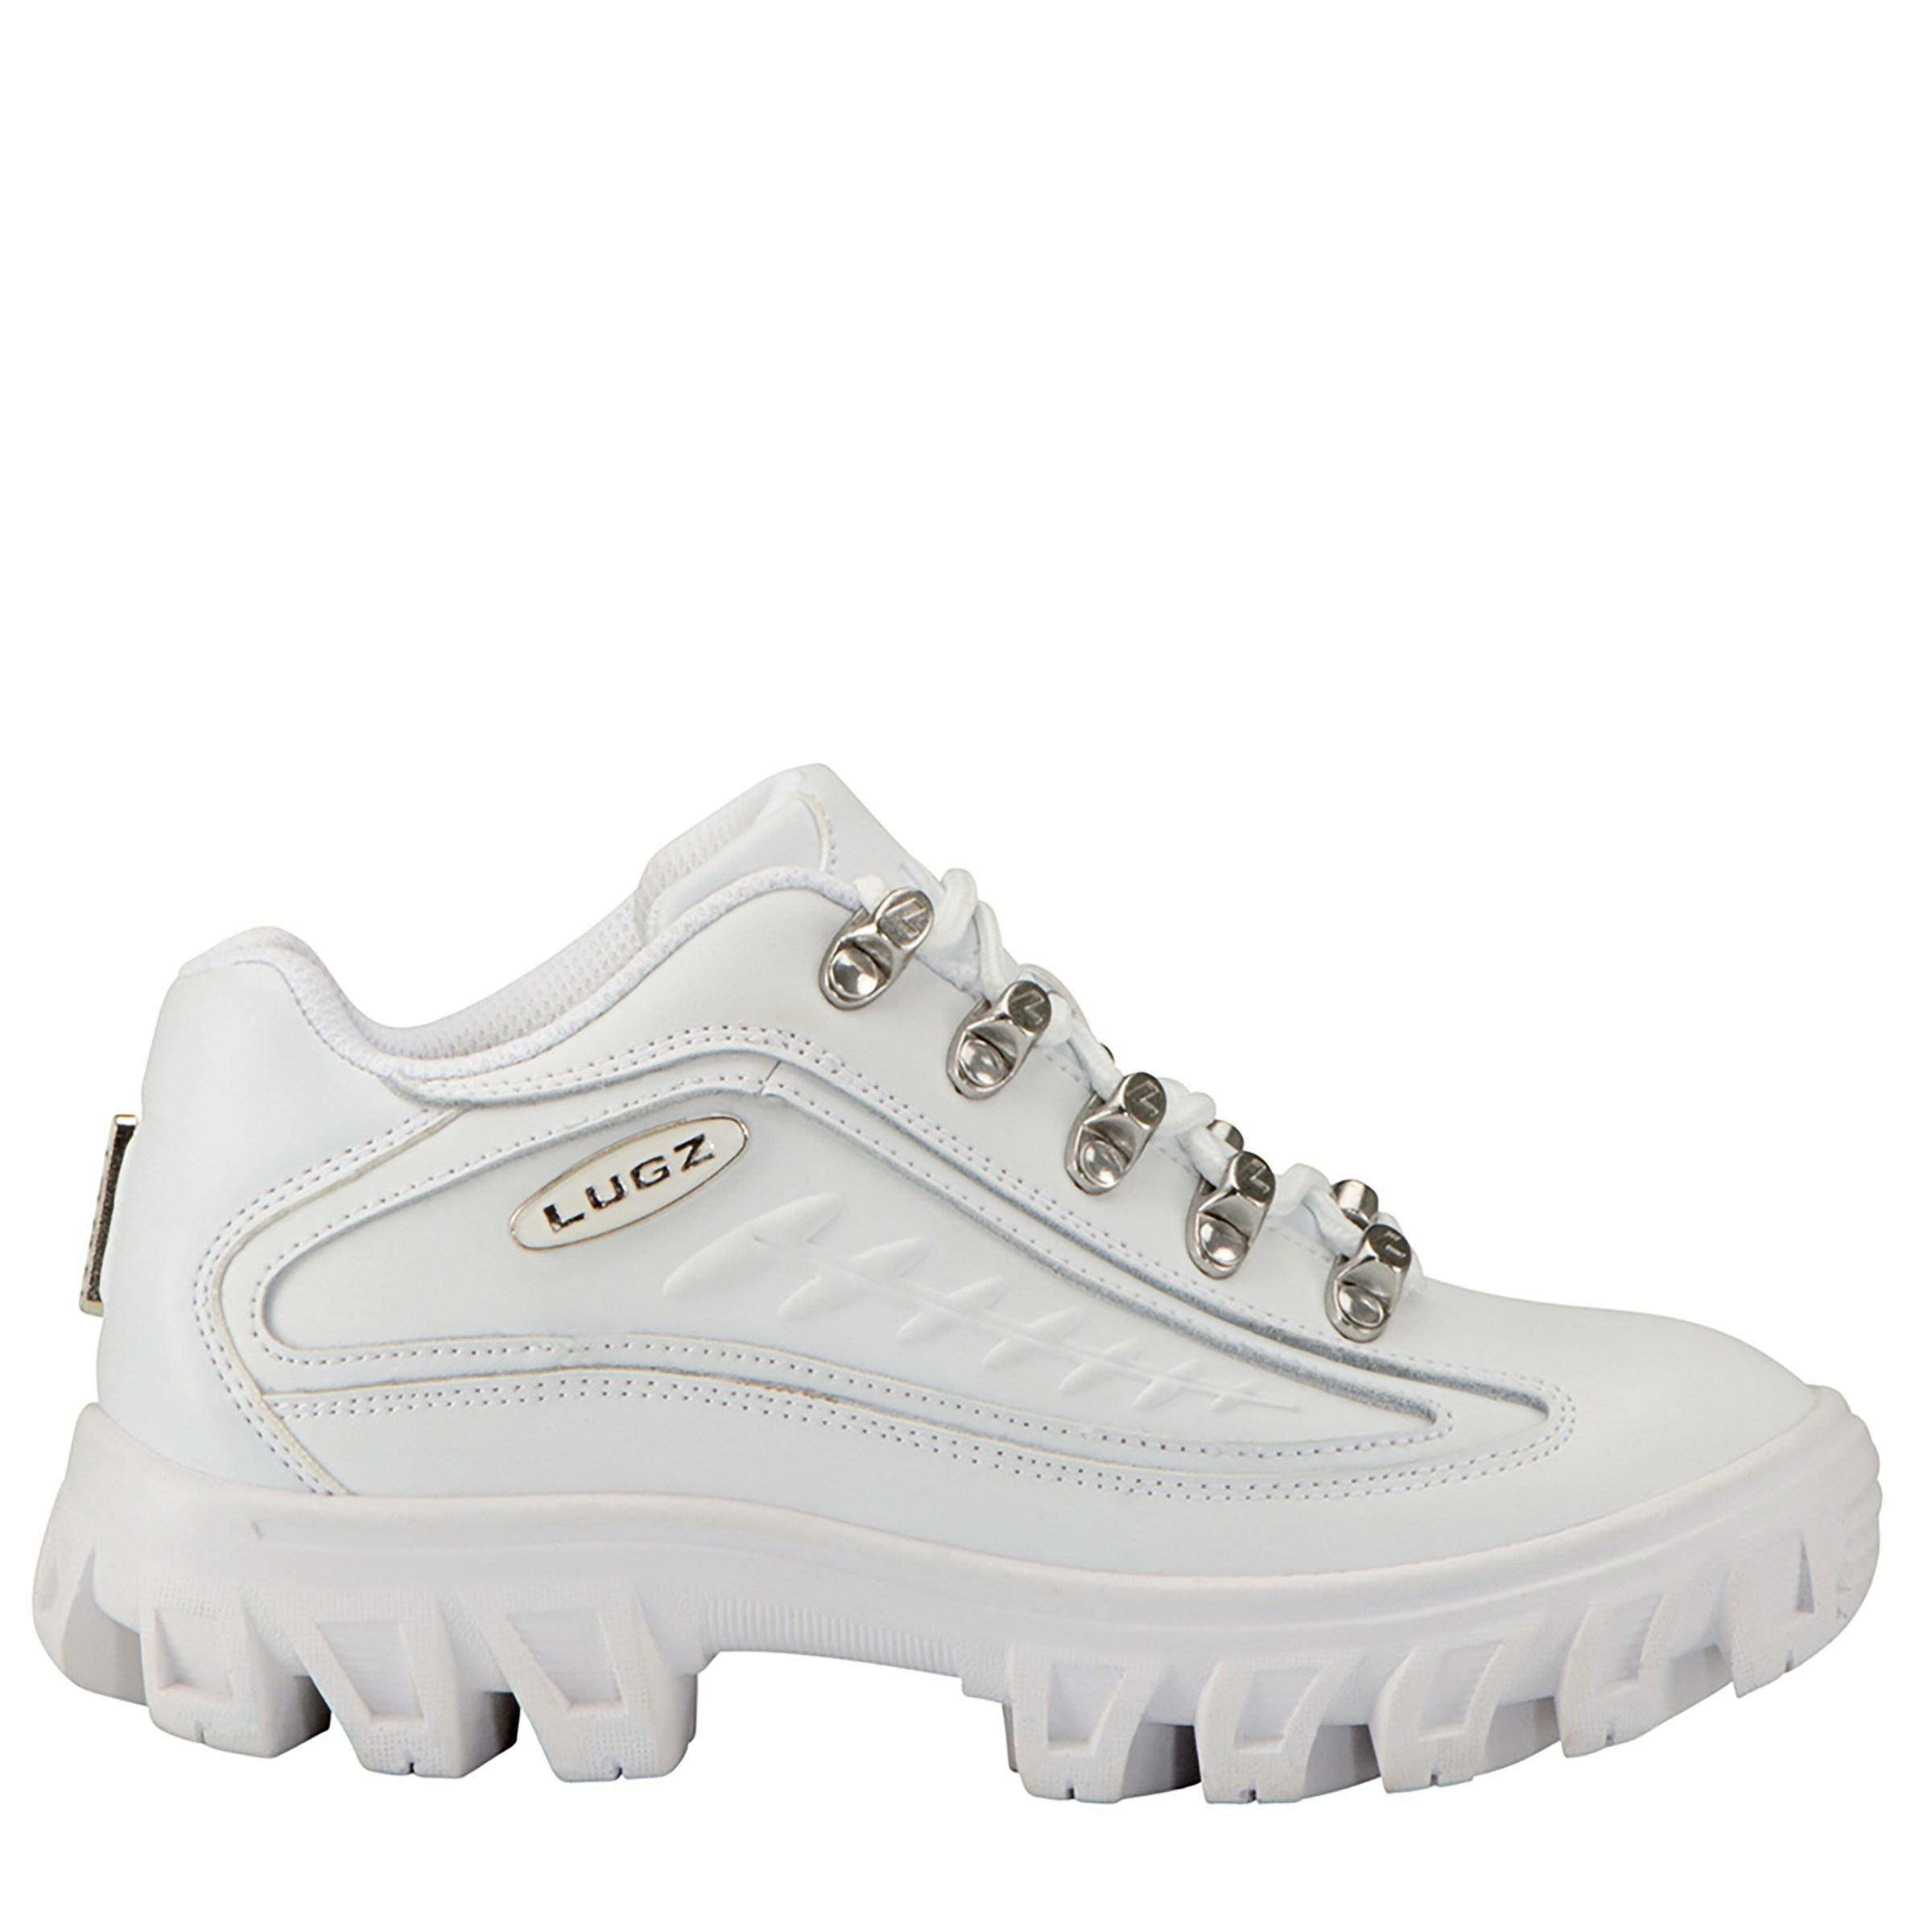 white lugz sneakers